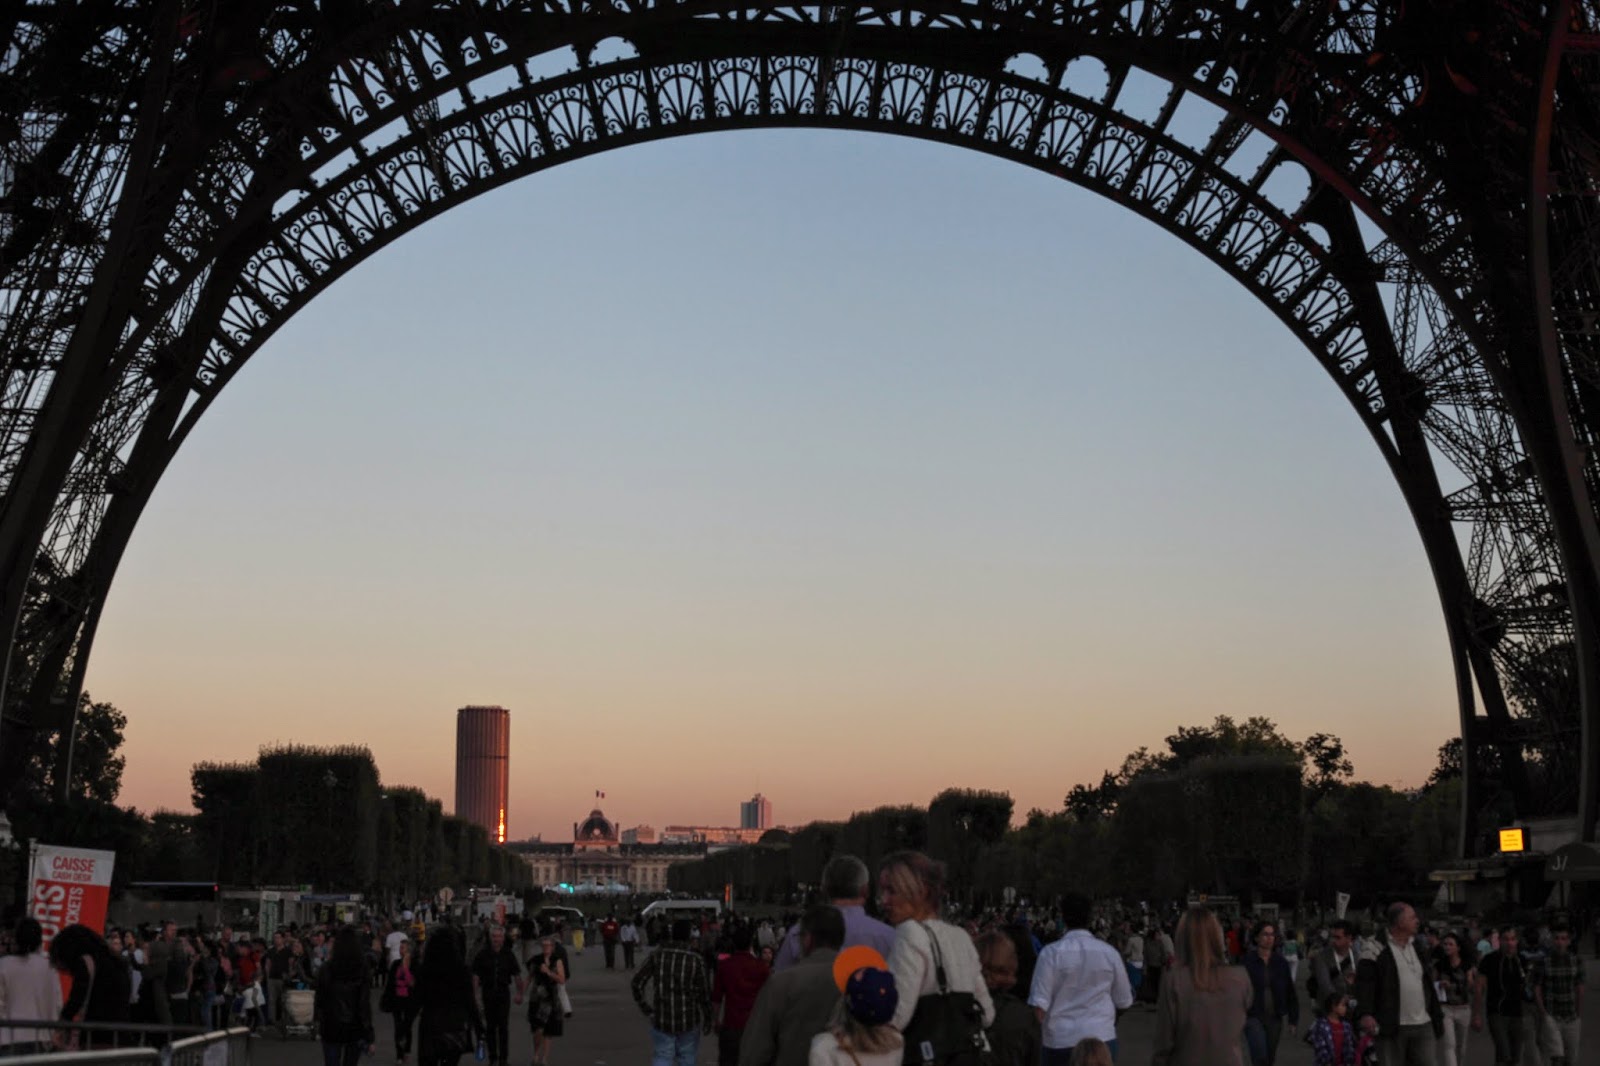 Parisian sunset